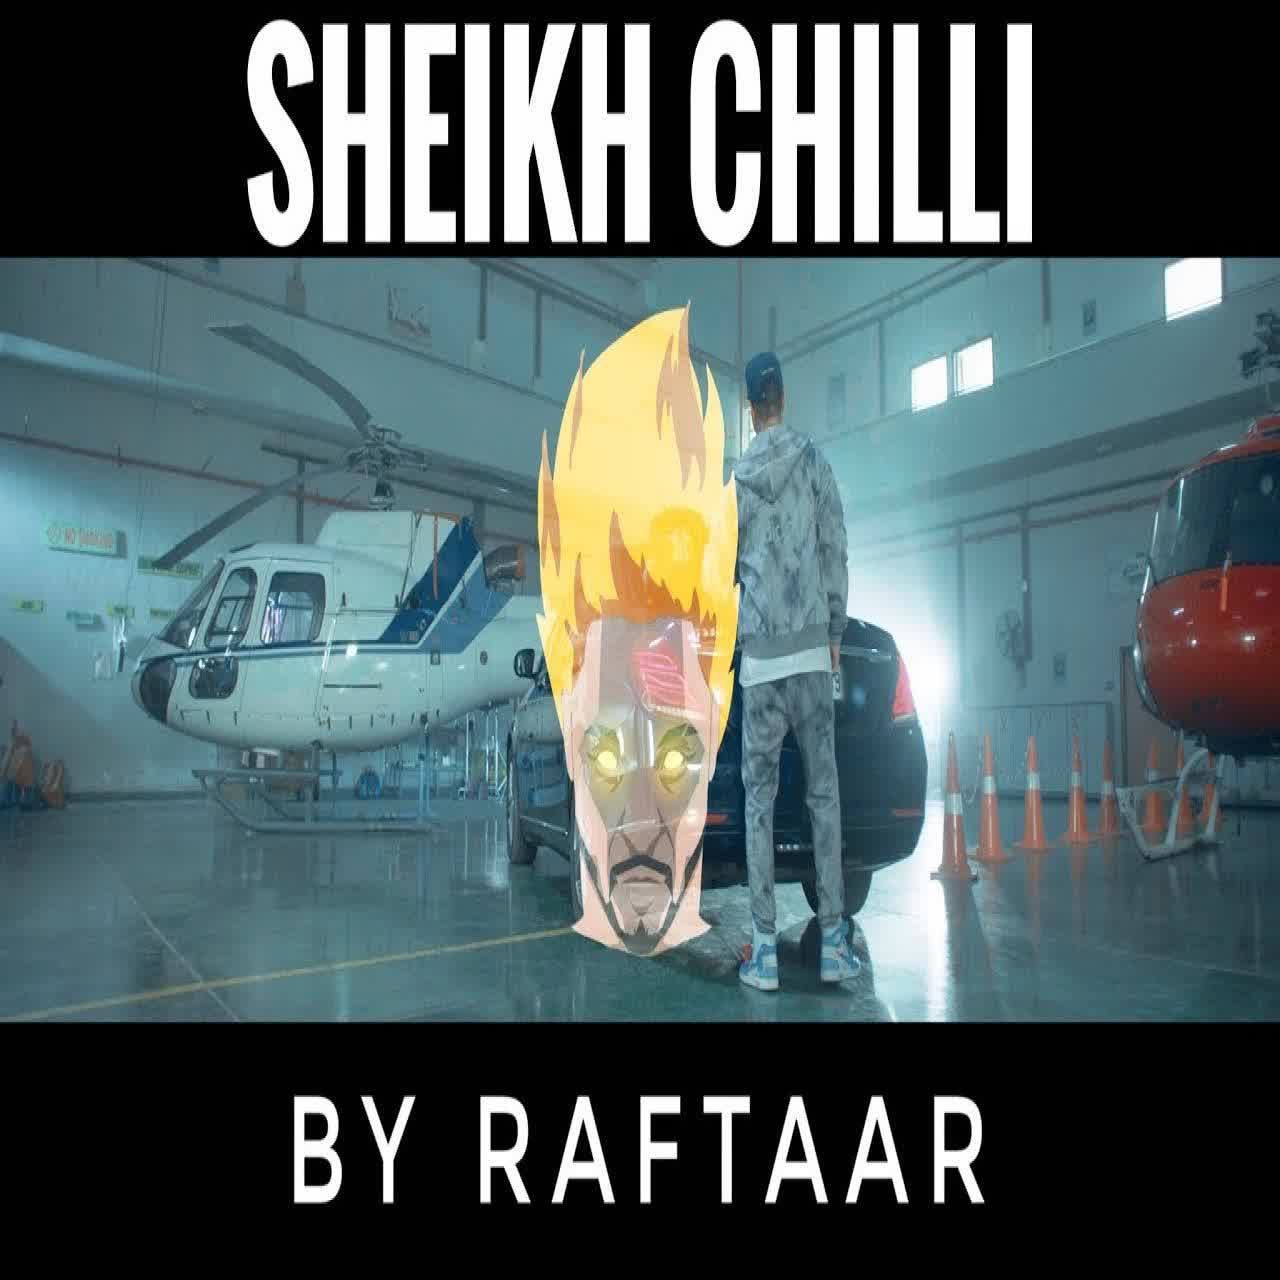 Sheikh Chilli Raftaar mp3 song download 